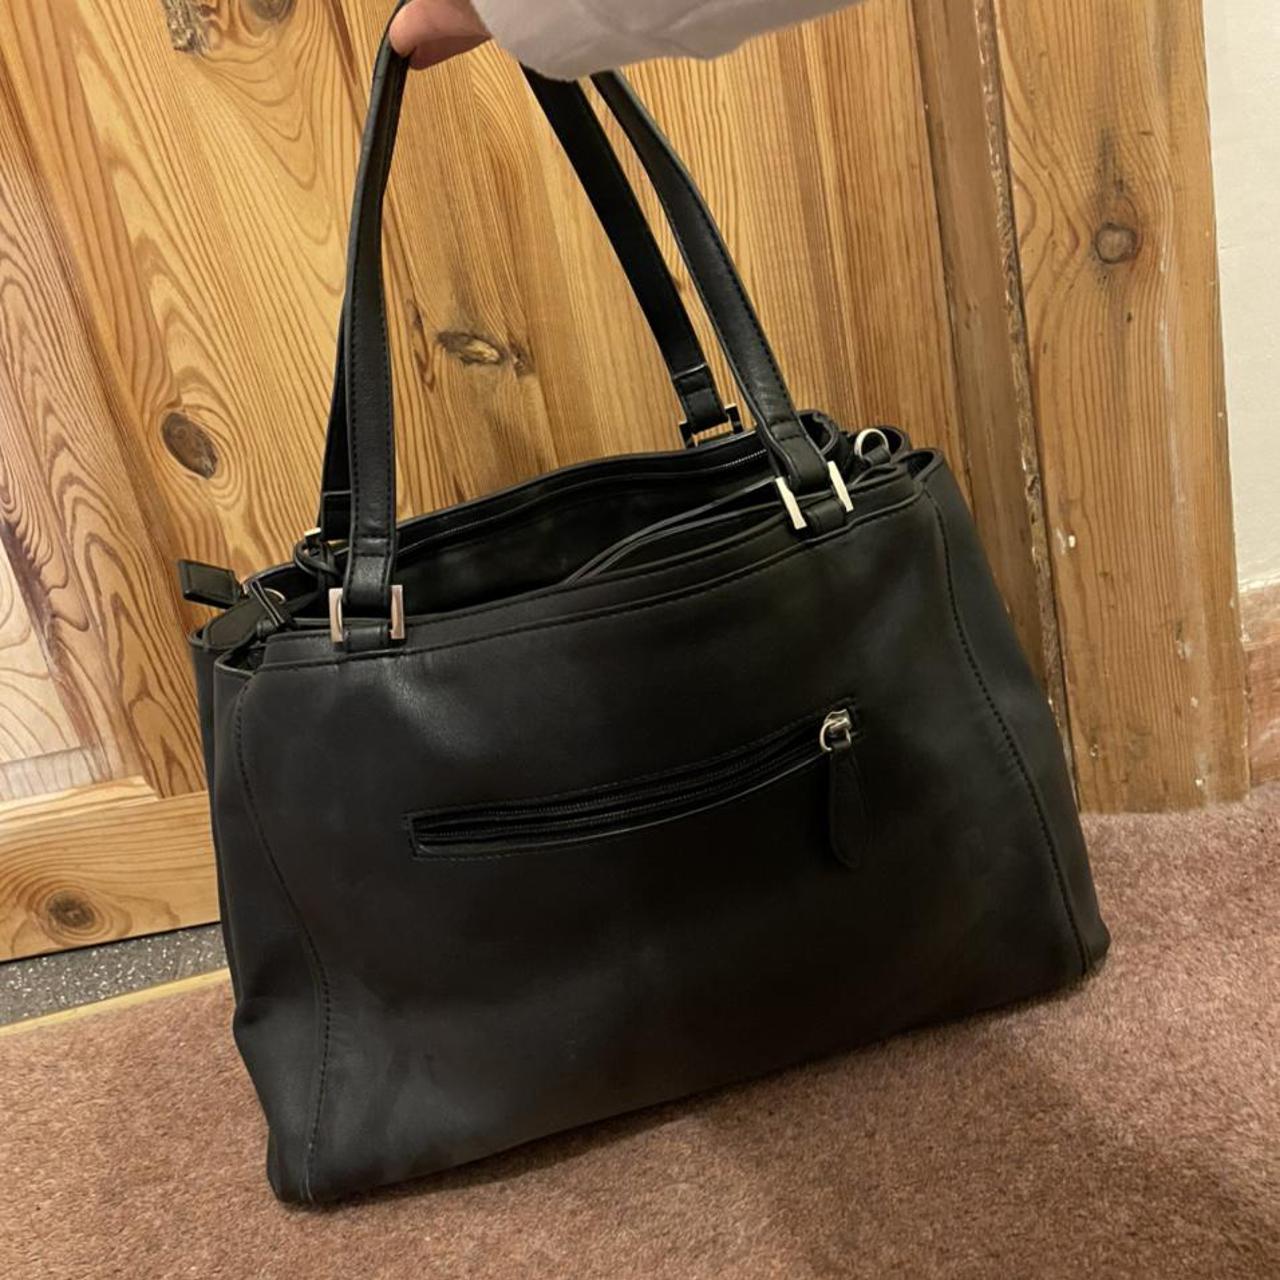 Product Image 2 - Fiorelli Black Leather Compartment Bag